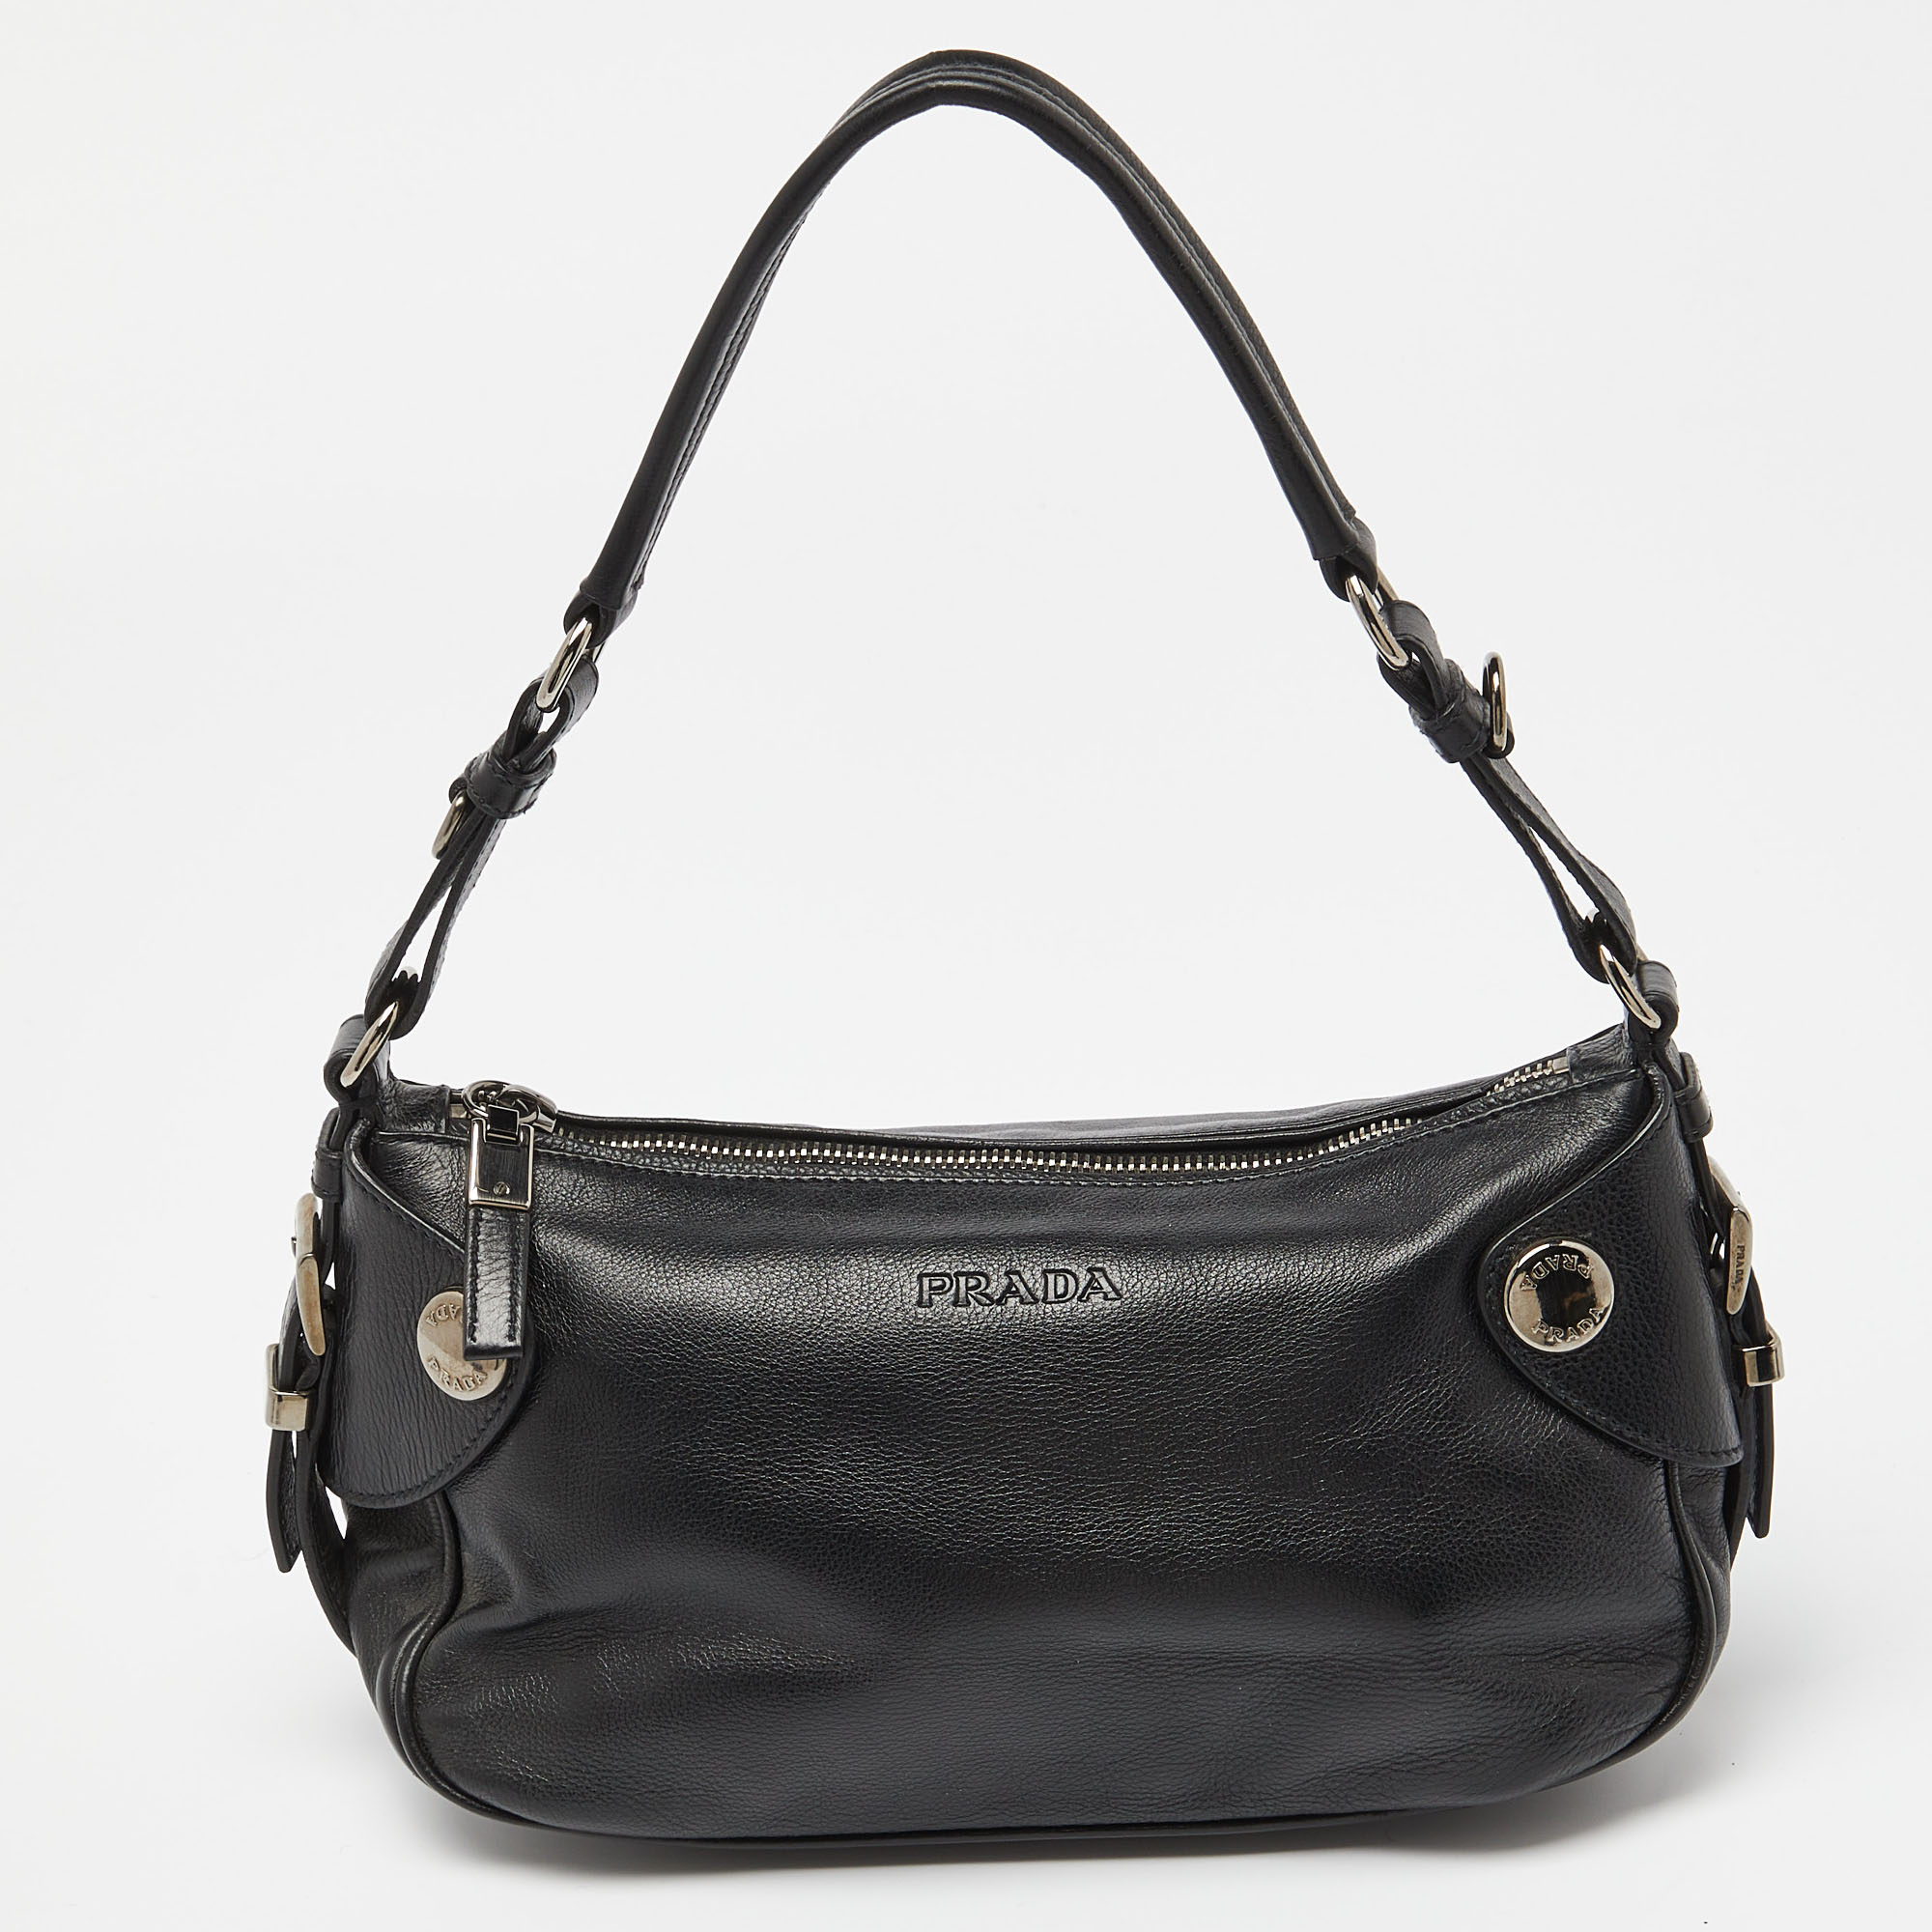 Prada black leather zip shoulder bag